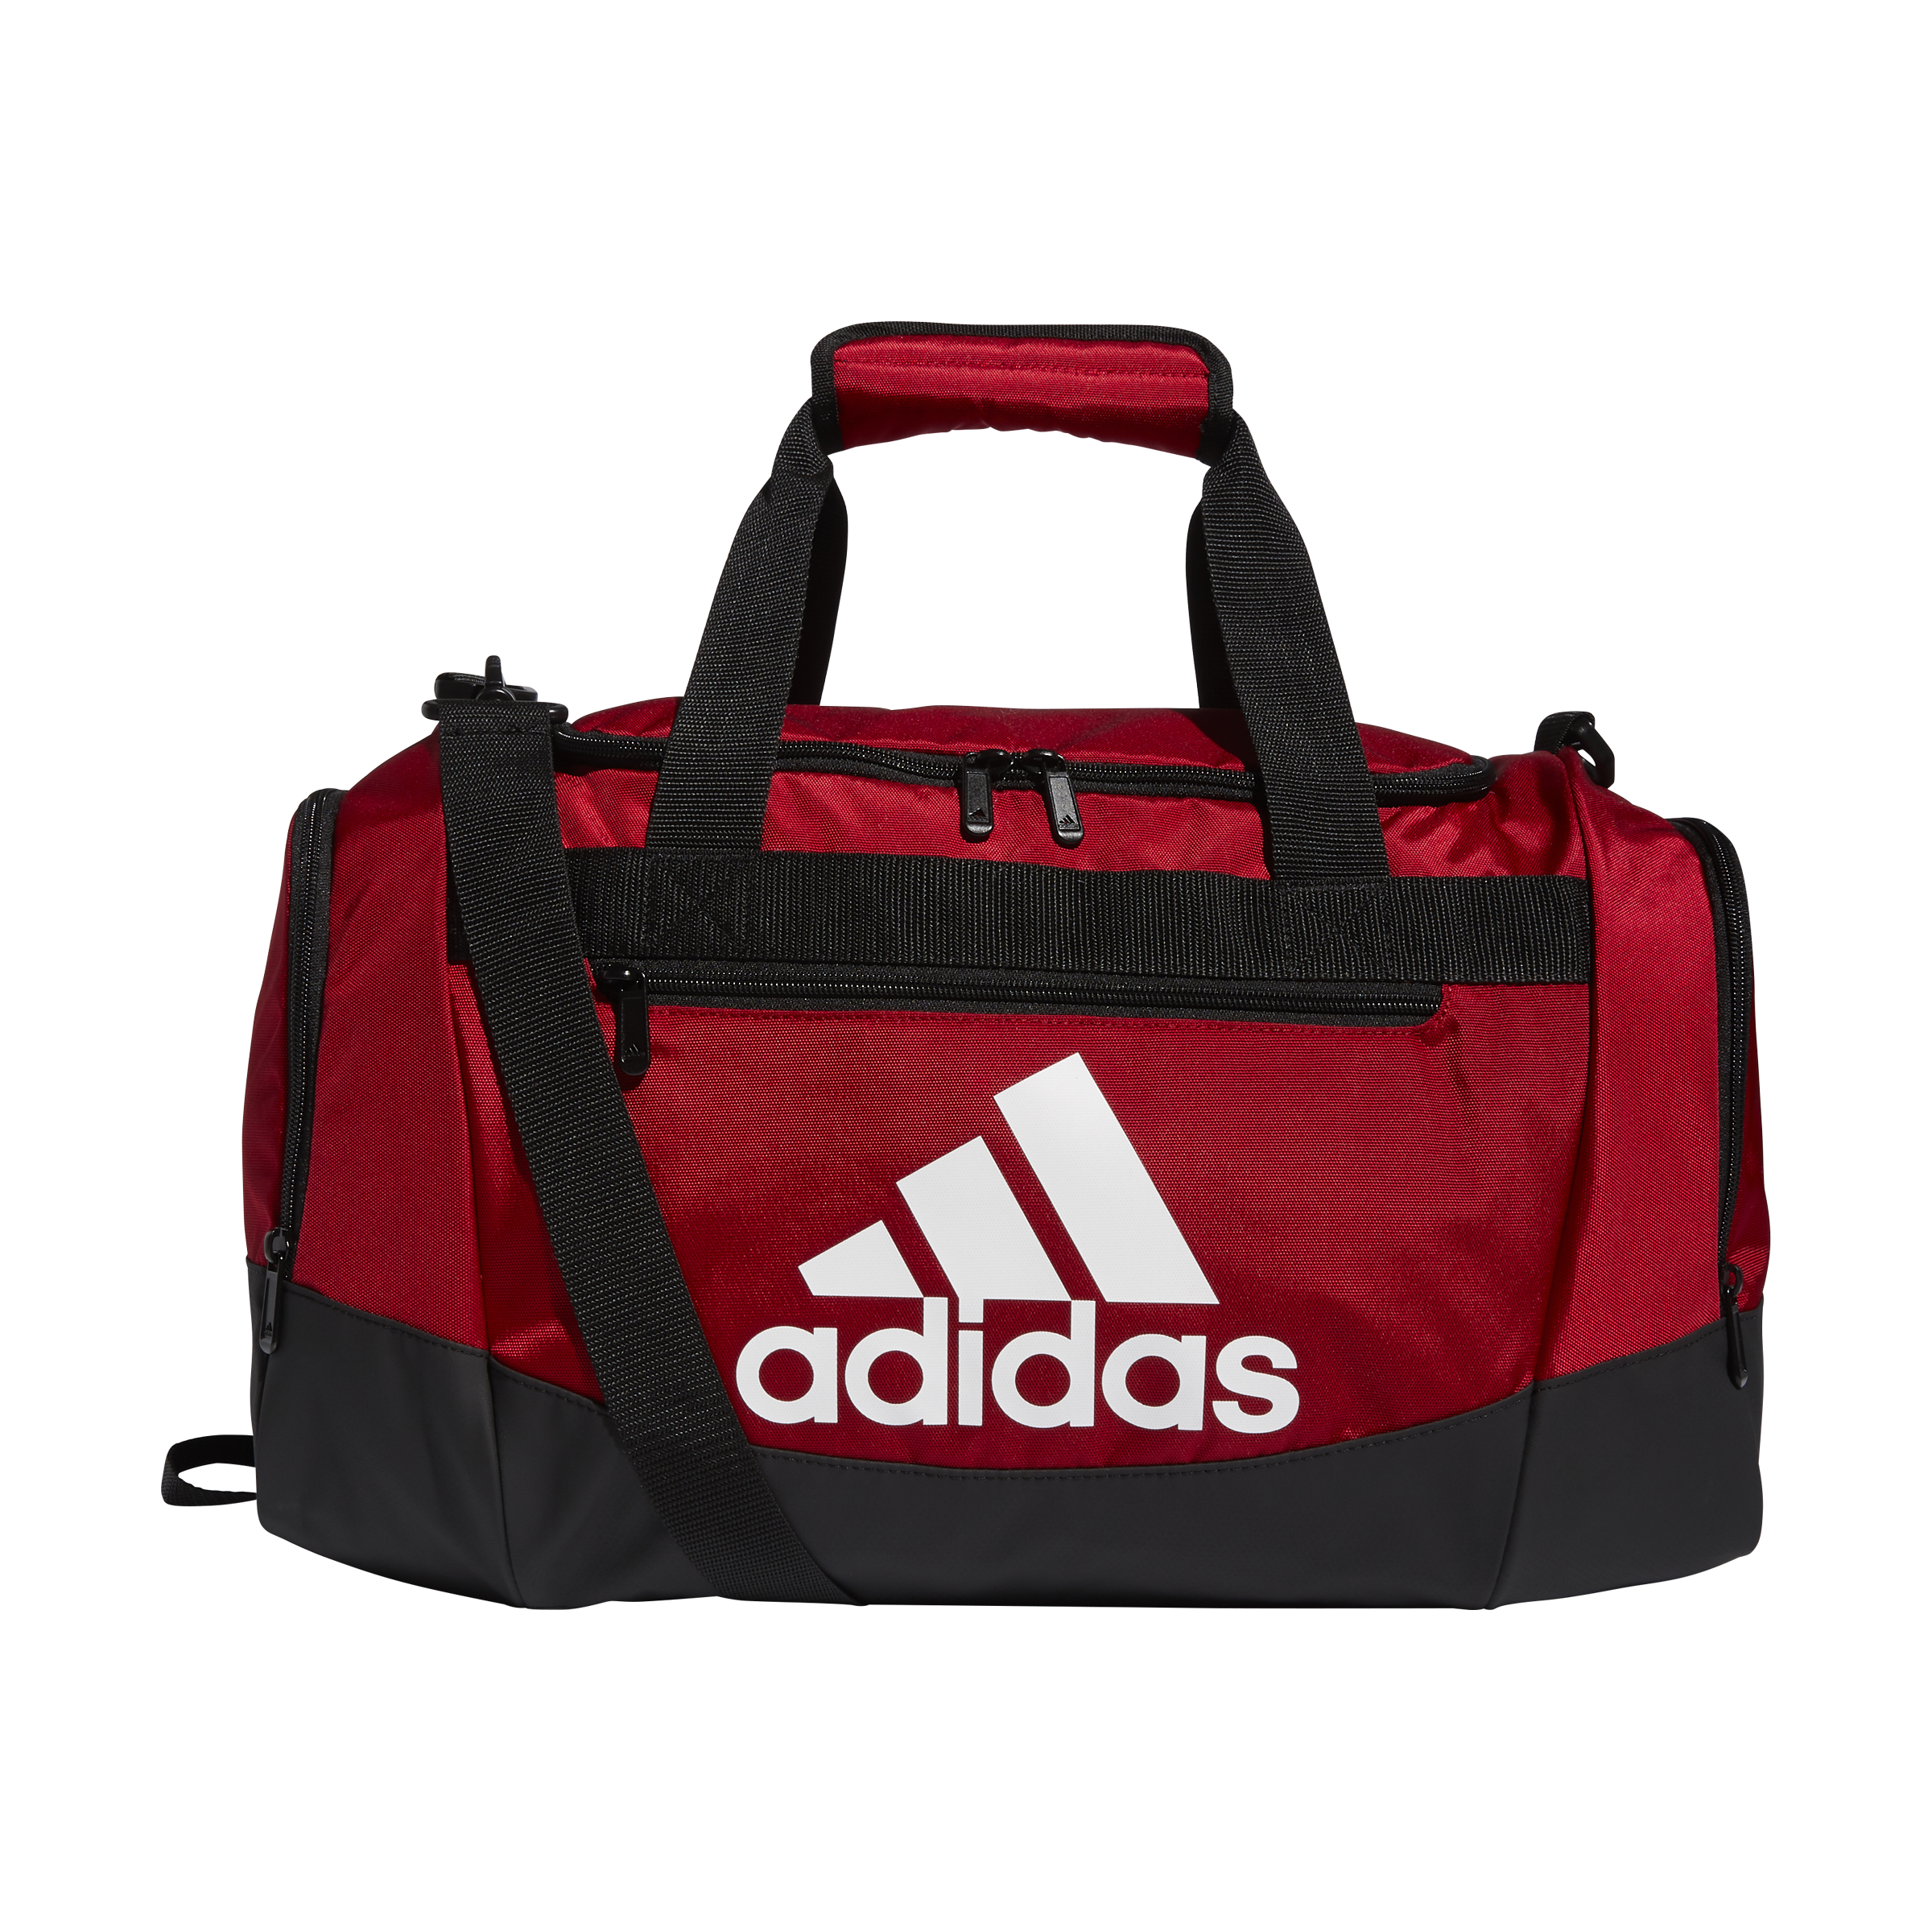 Adidas Defender IV Duffel Bag - Small